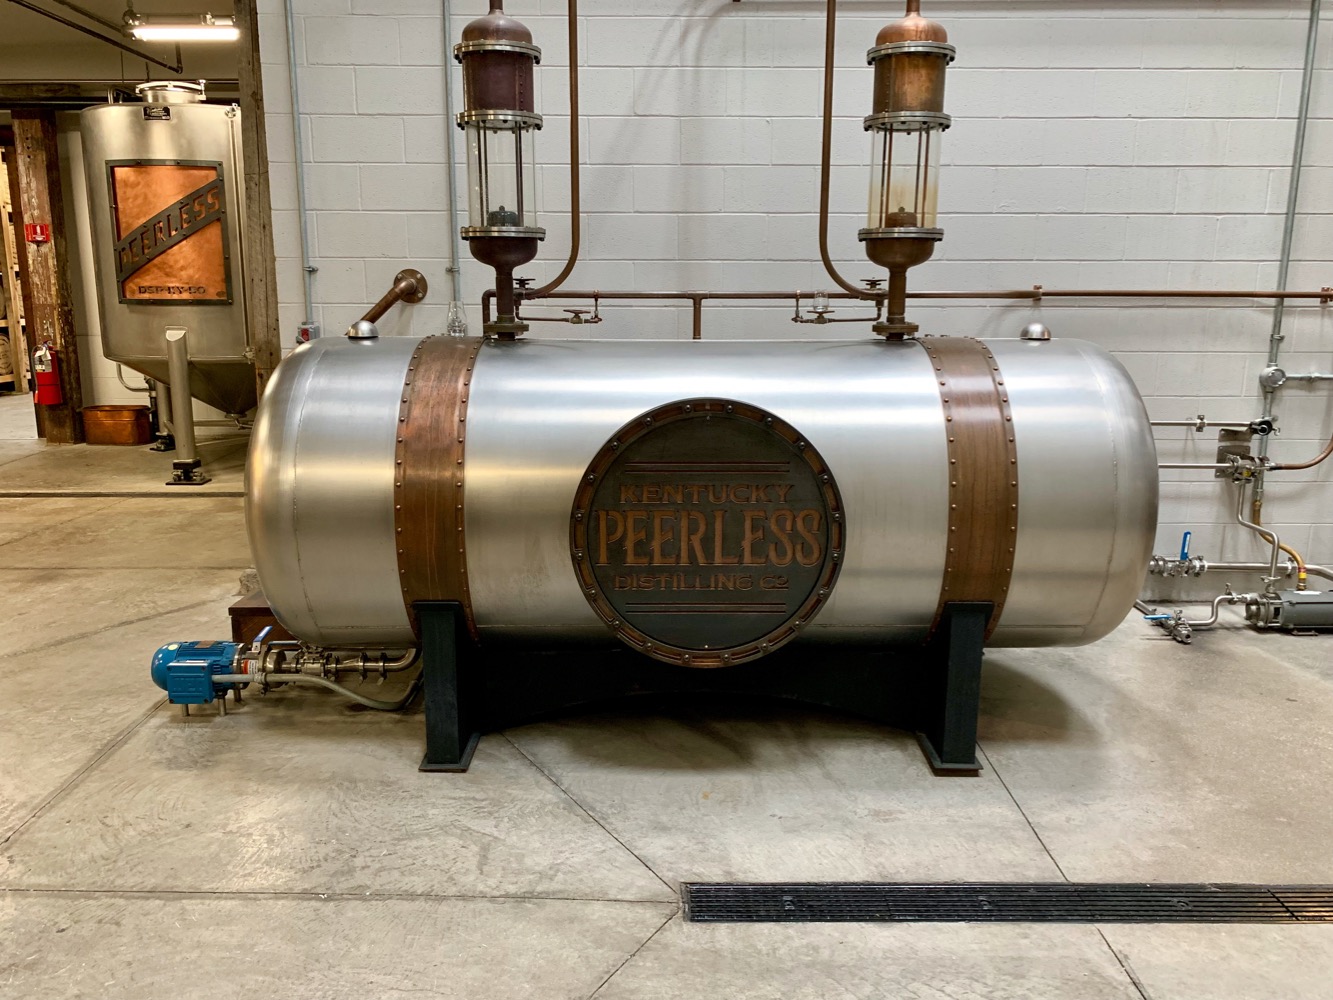 Kentucky Peerless Distilling - Low-High Wine